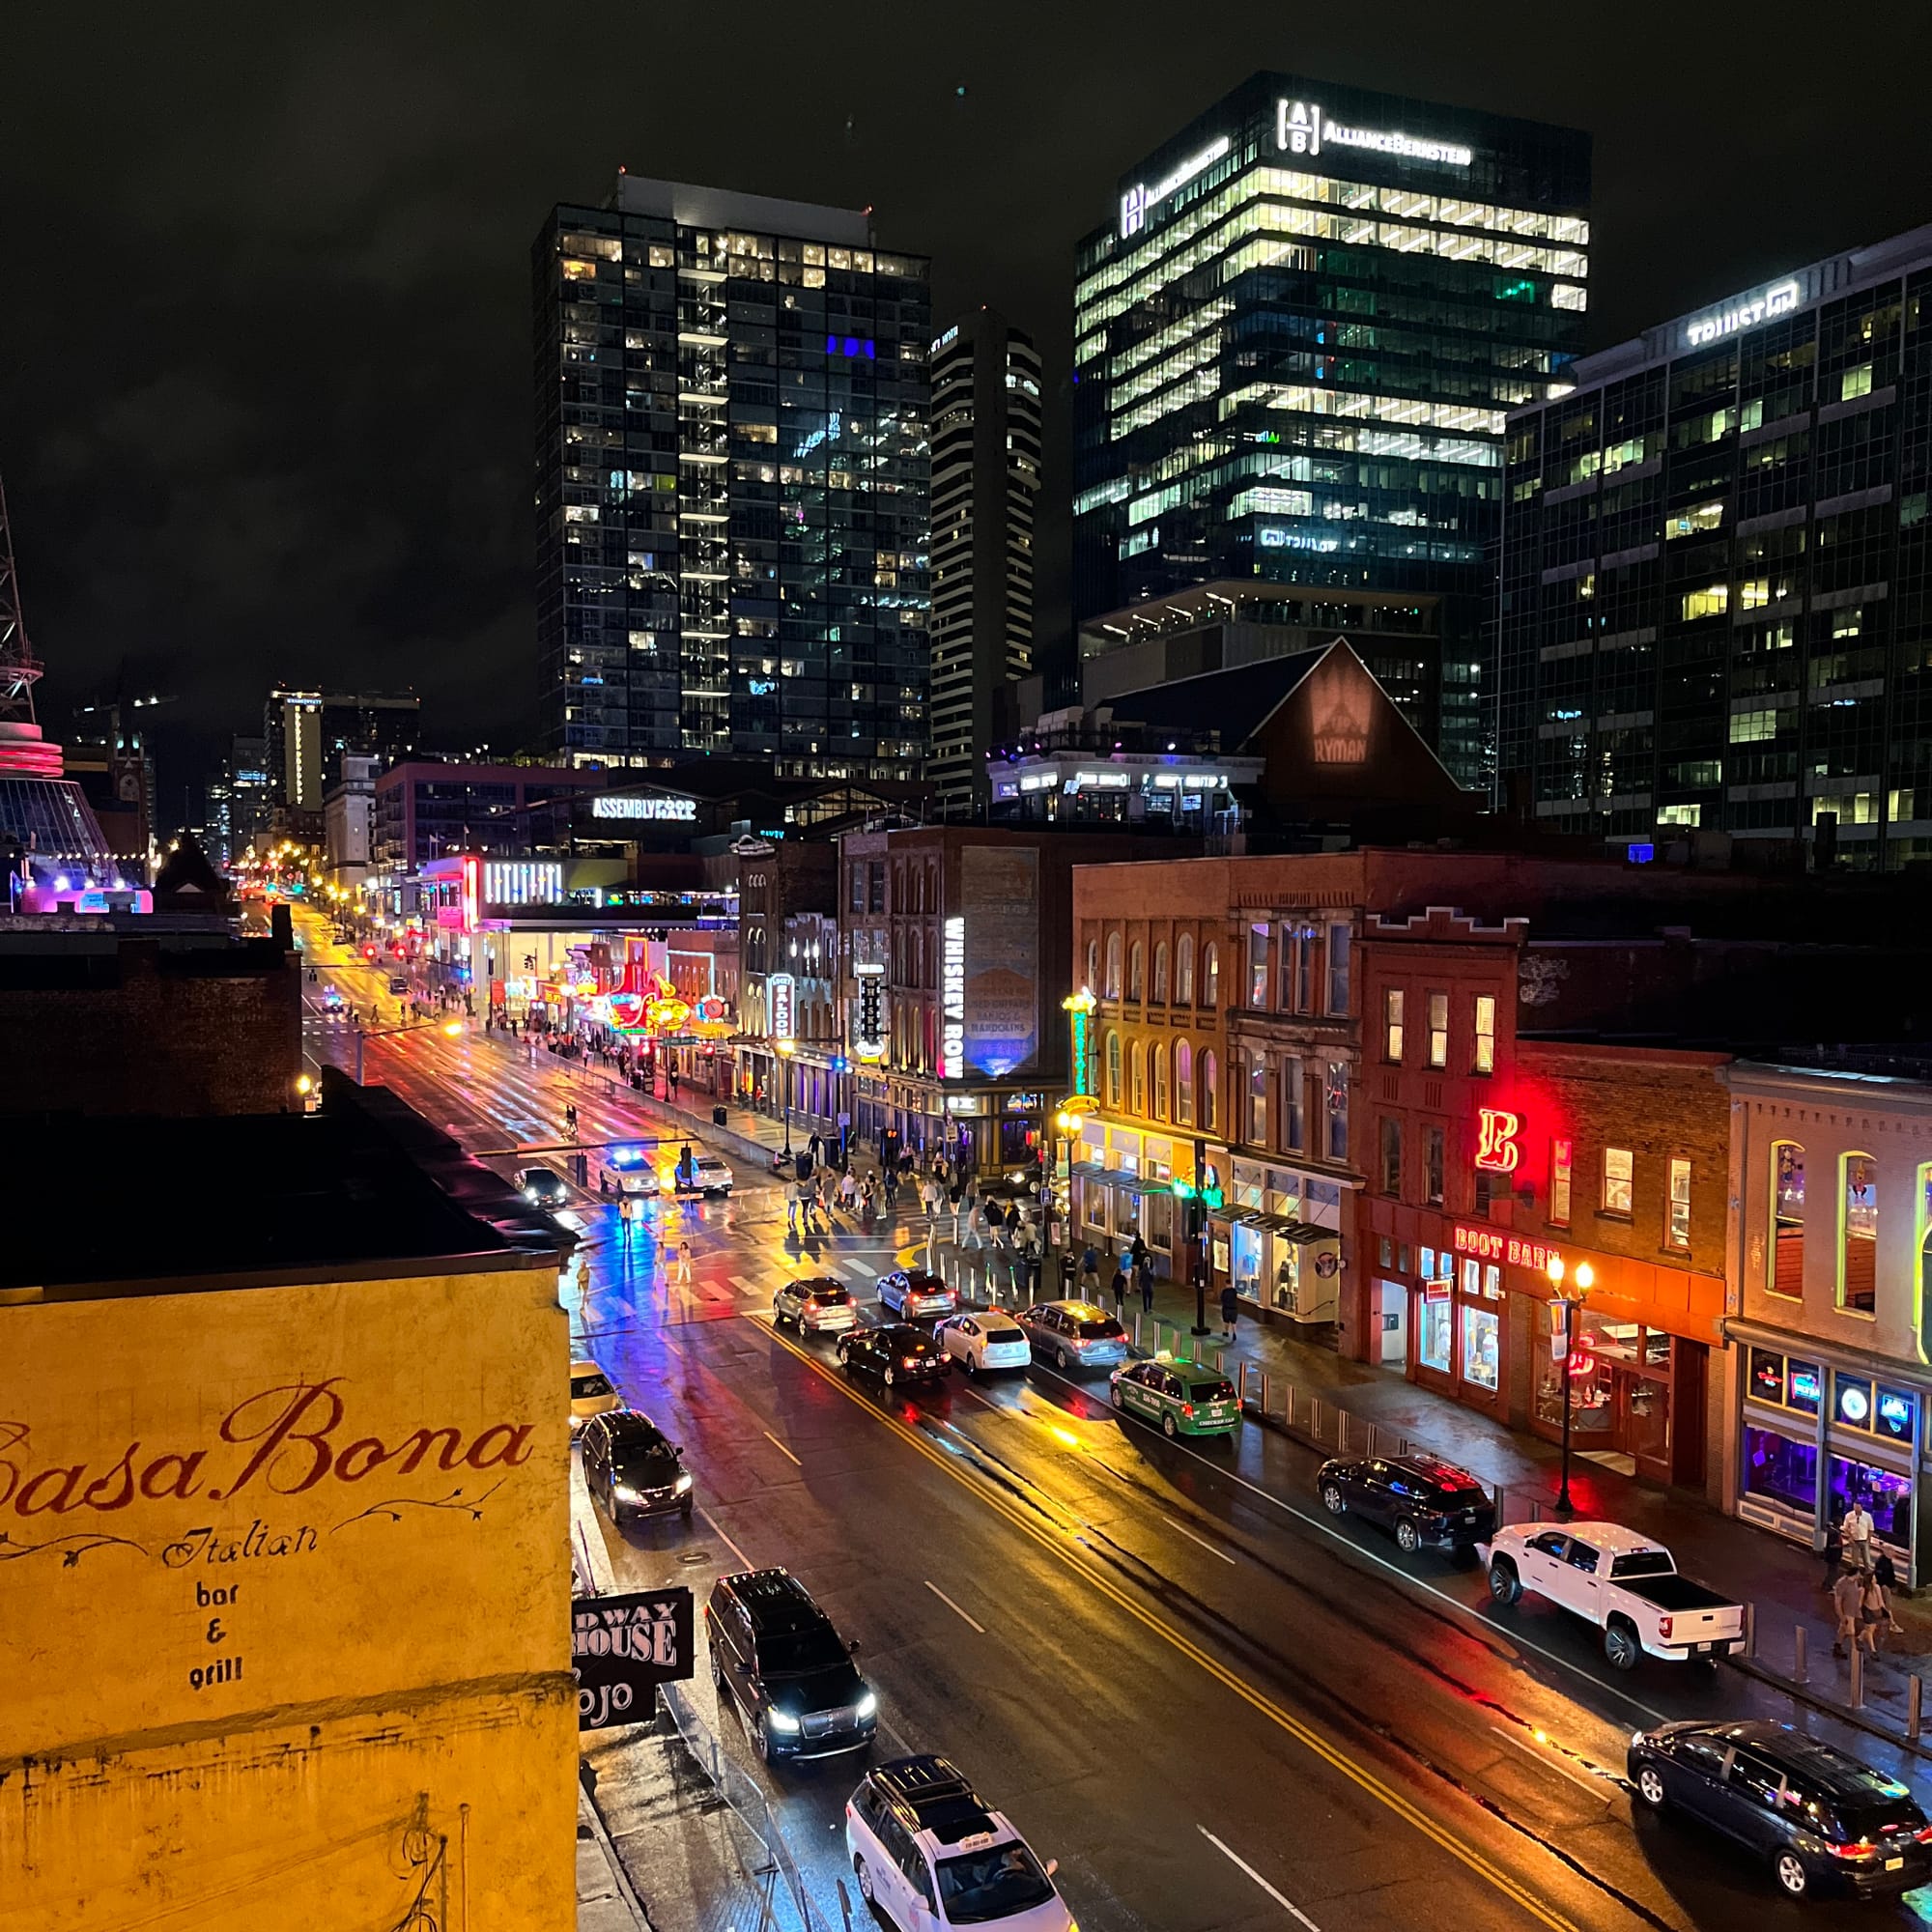 Travel Stories: Nashville Part Two - From Ryman Auditorium to Broadway: Nashville's Harmonious Hotspots